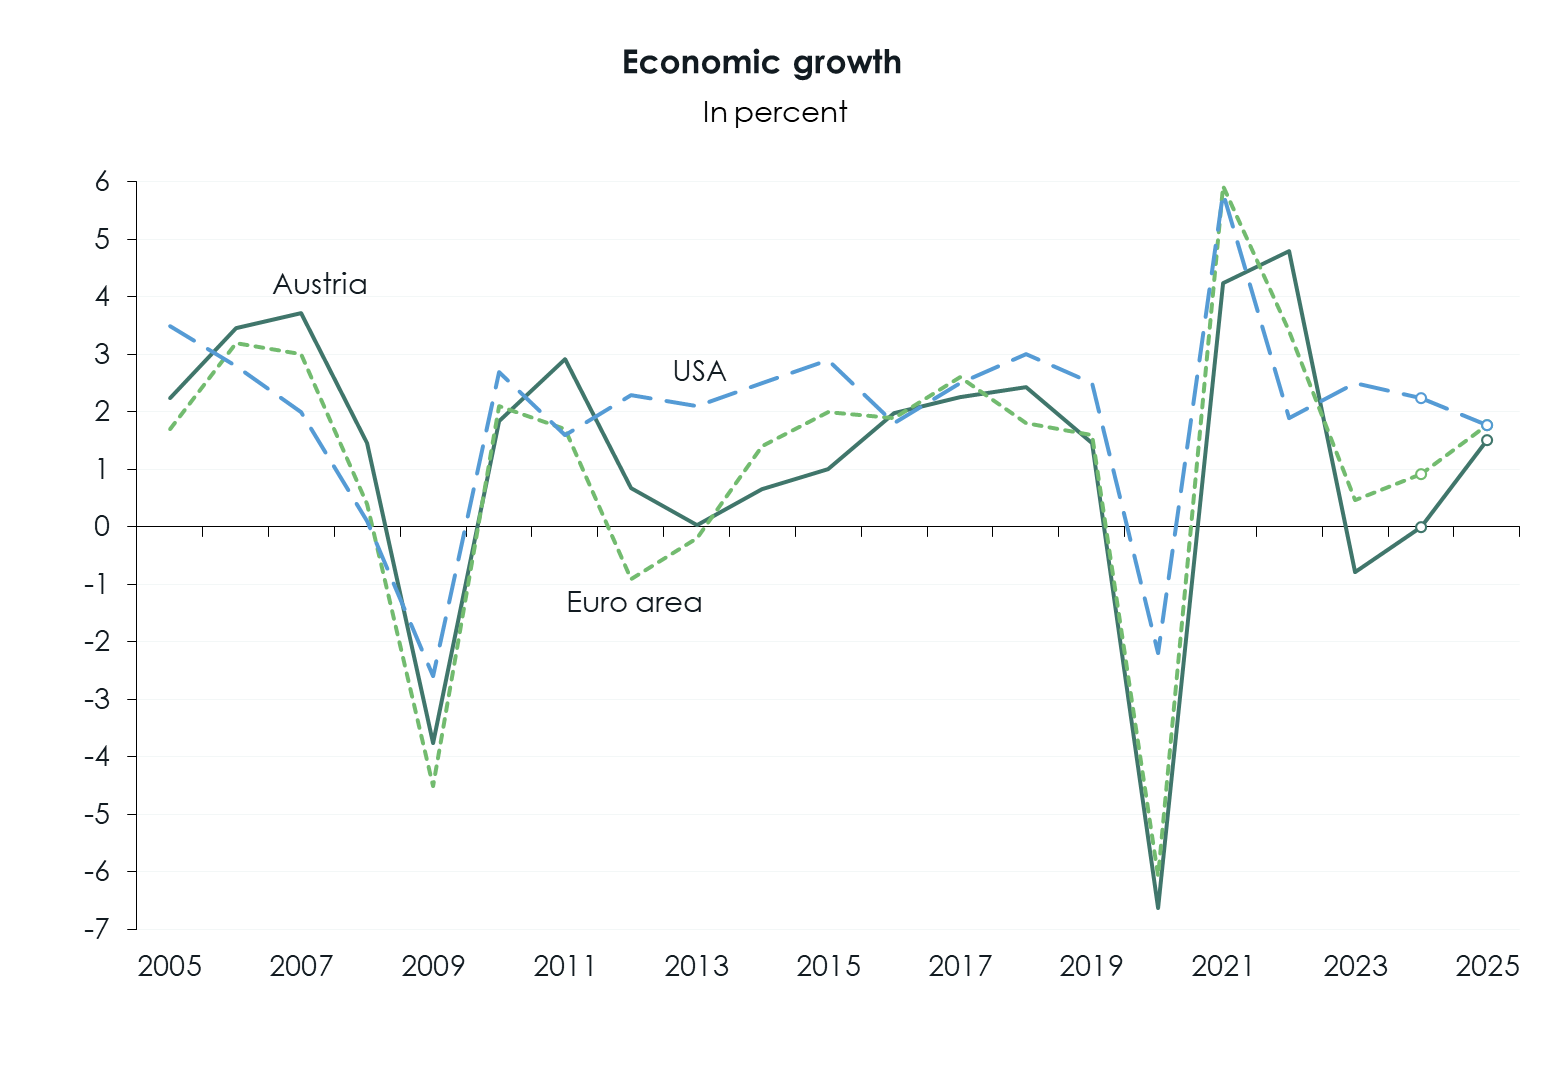 WIFO-BusinessCycleAnalysis Forecast EconomicGrowth